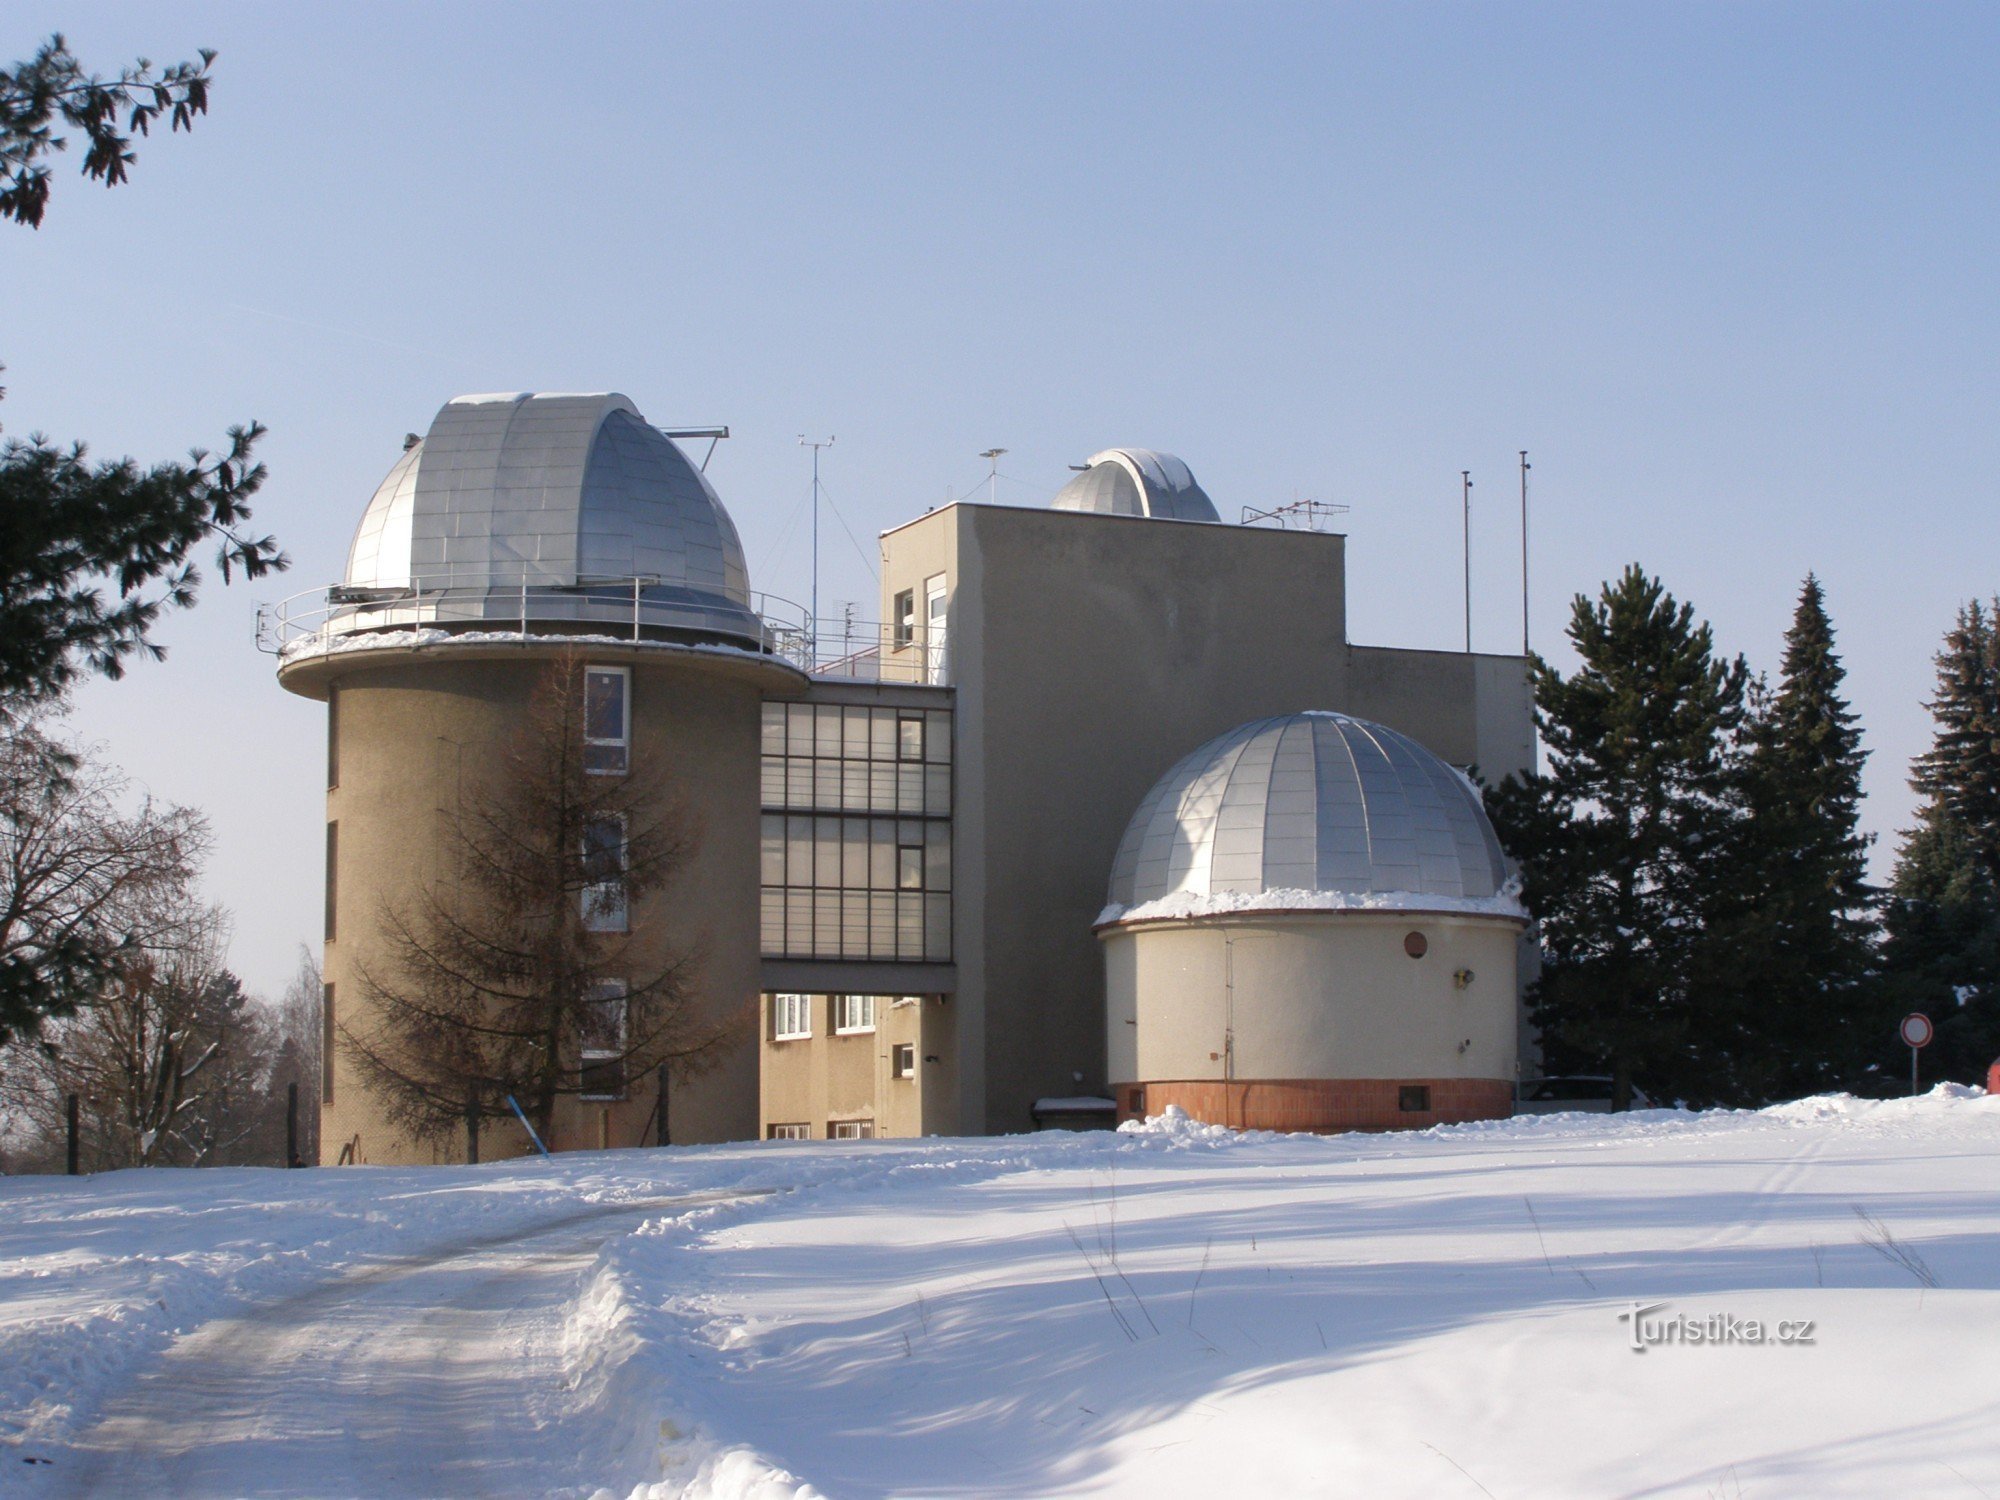 Hradec Králové - observatory and planetarium